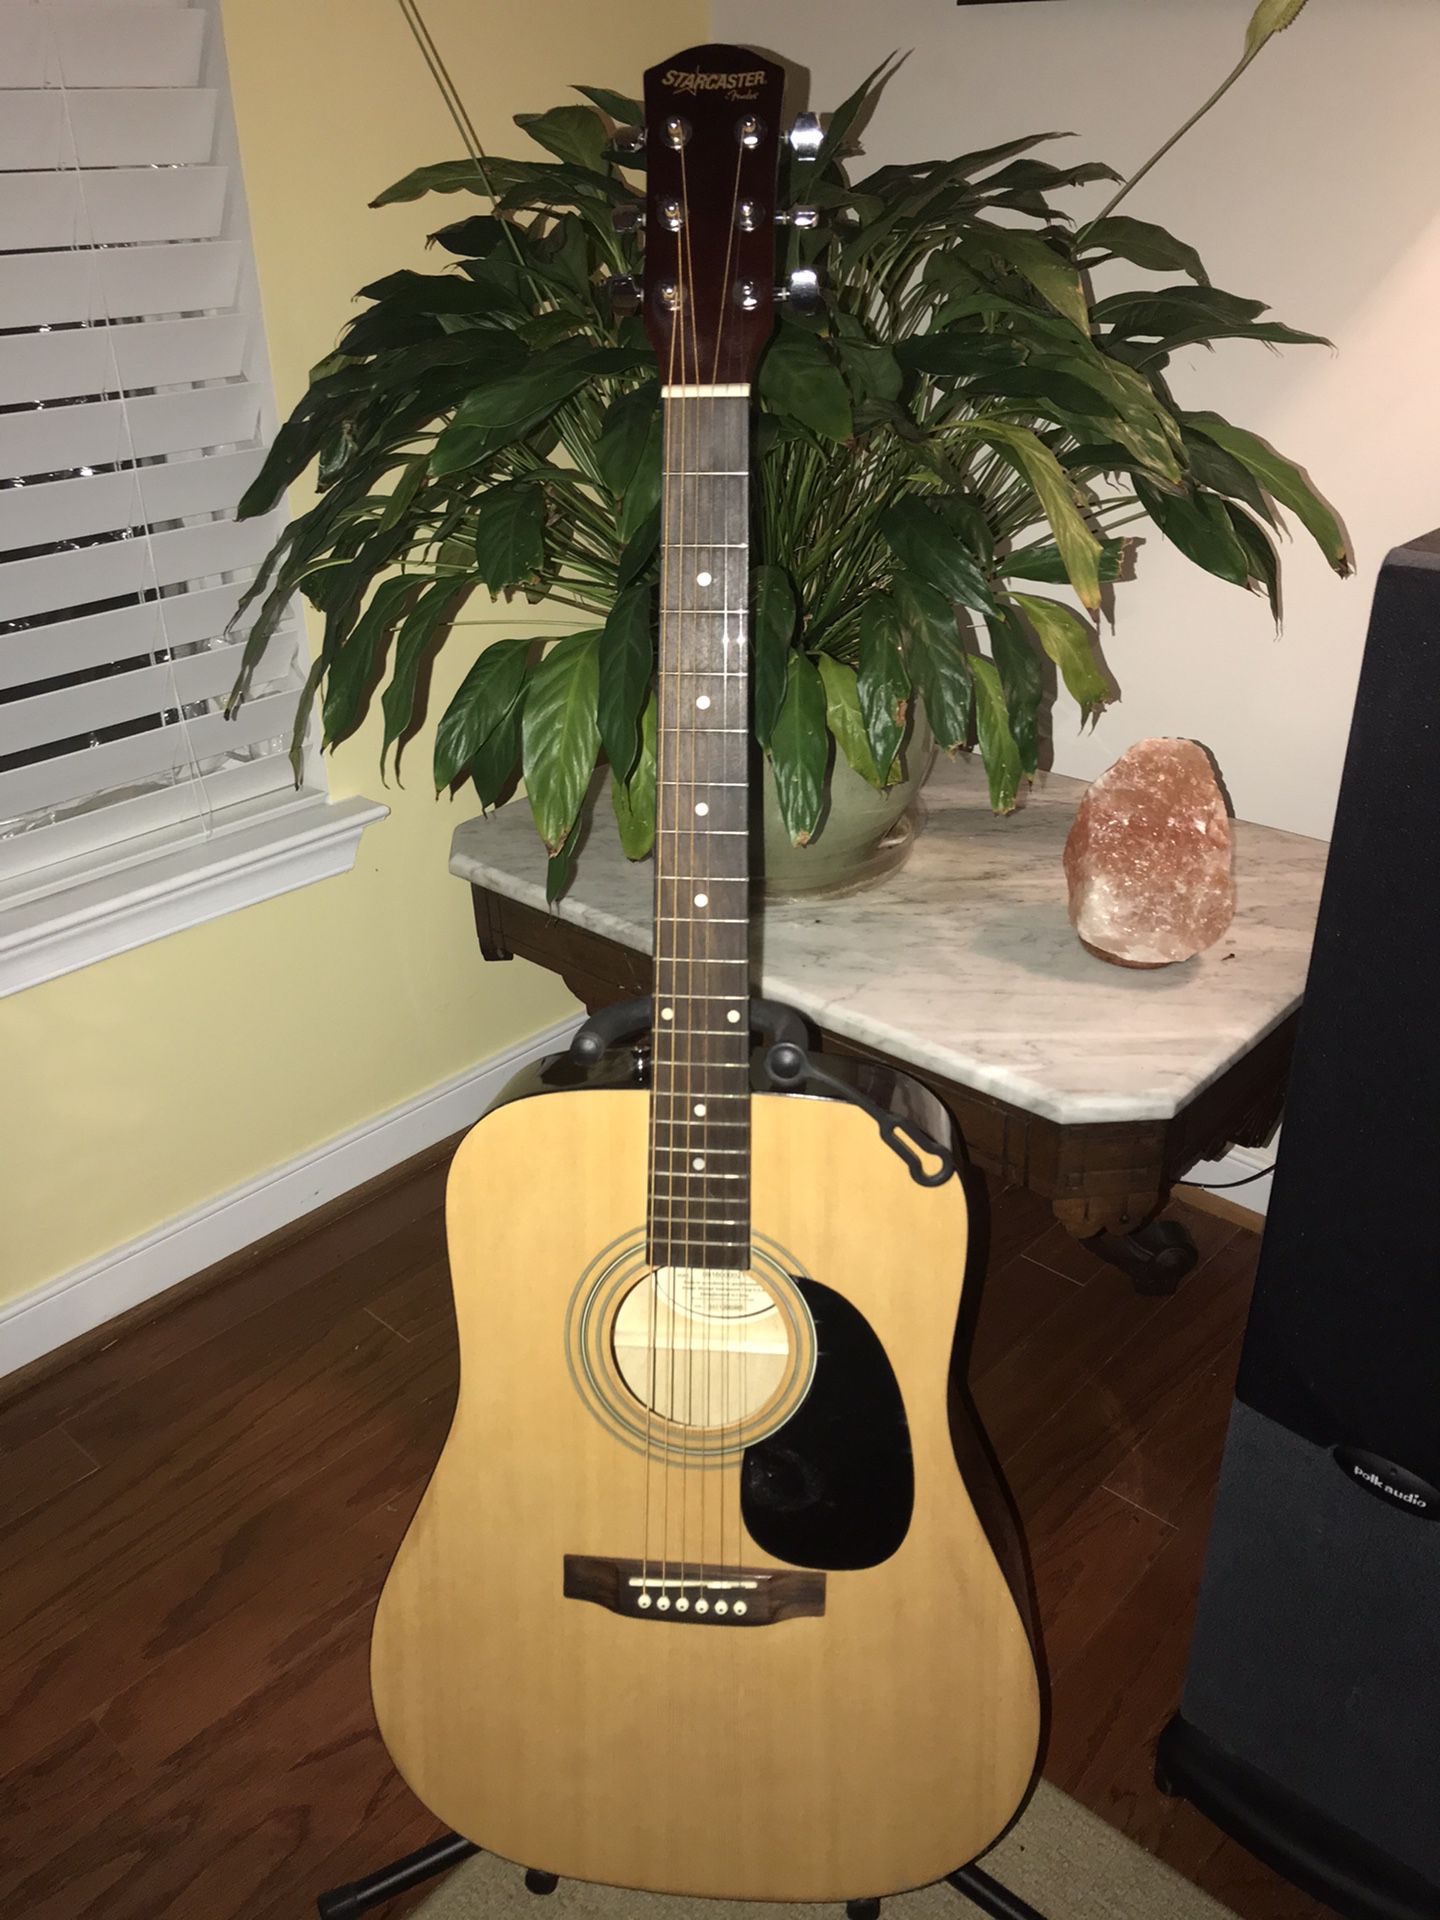 Fender Starcaster Acoustic Guitar $50